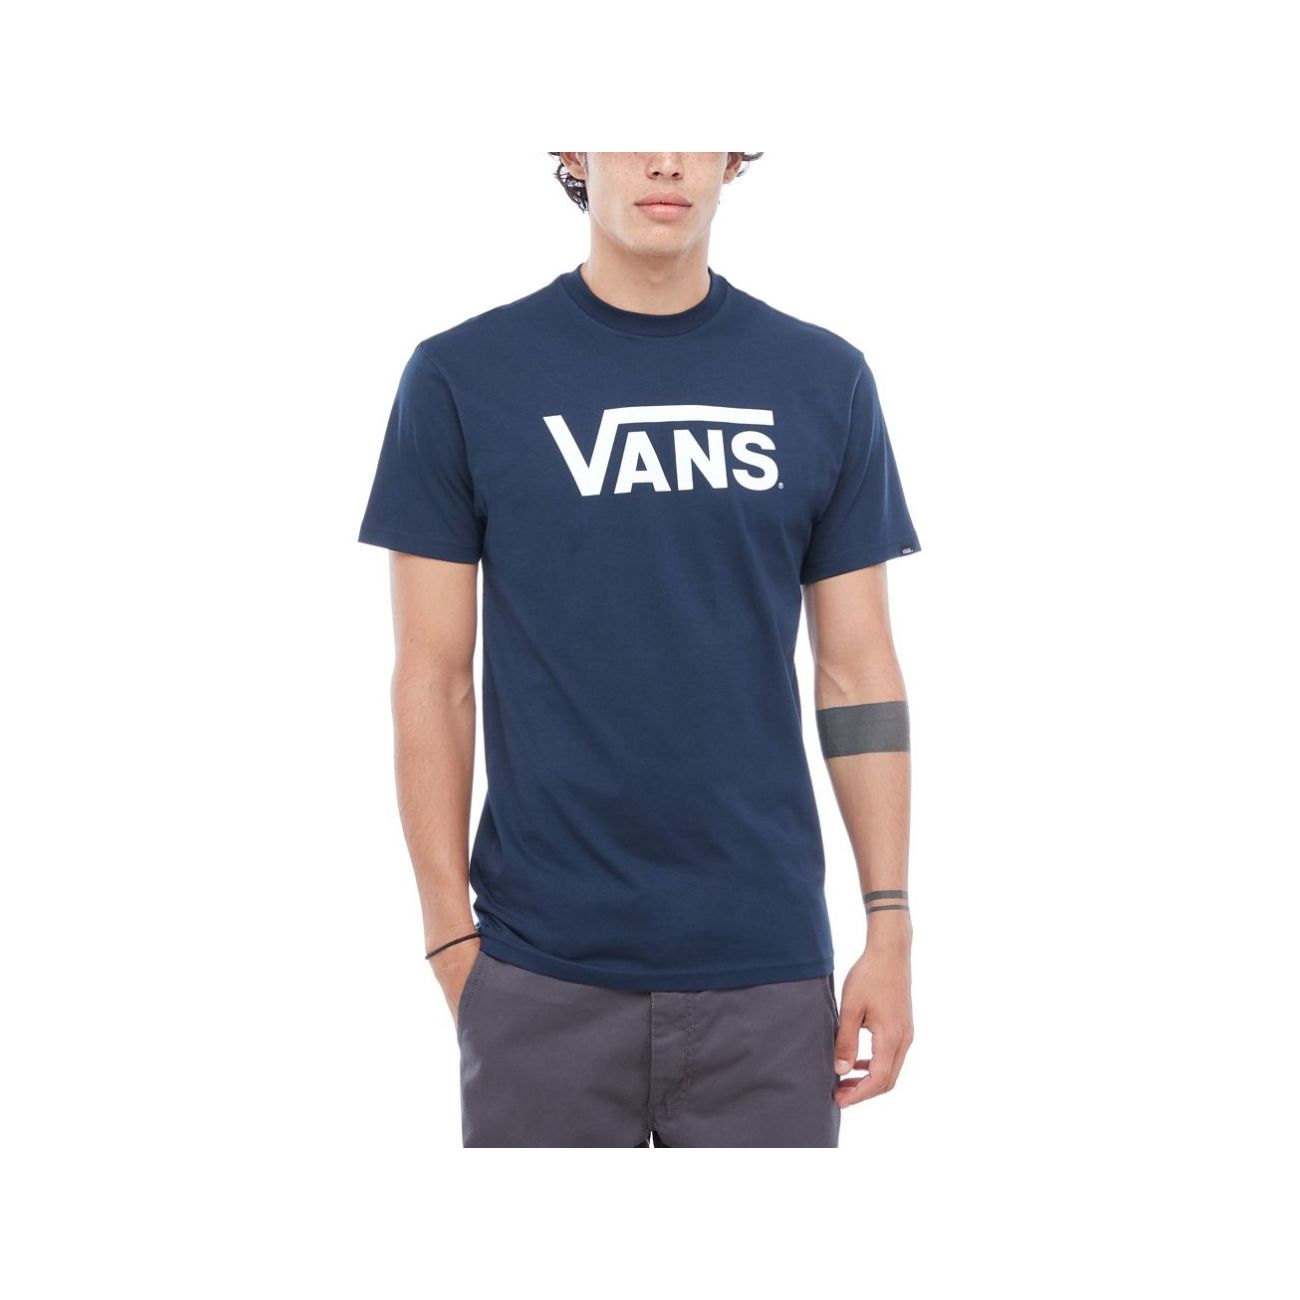 vans classic t shirt navy